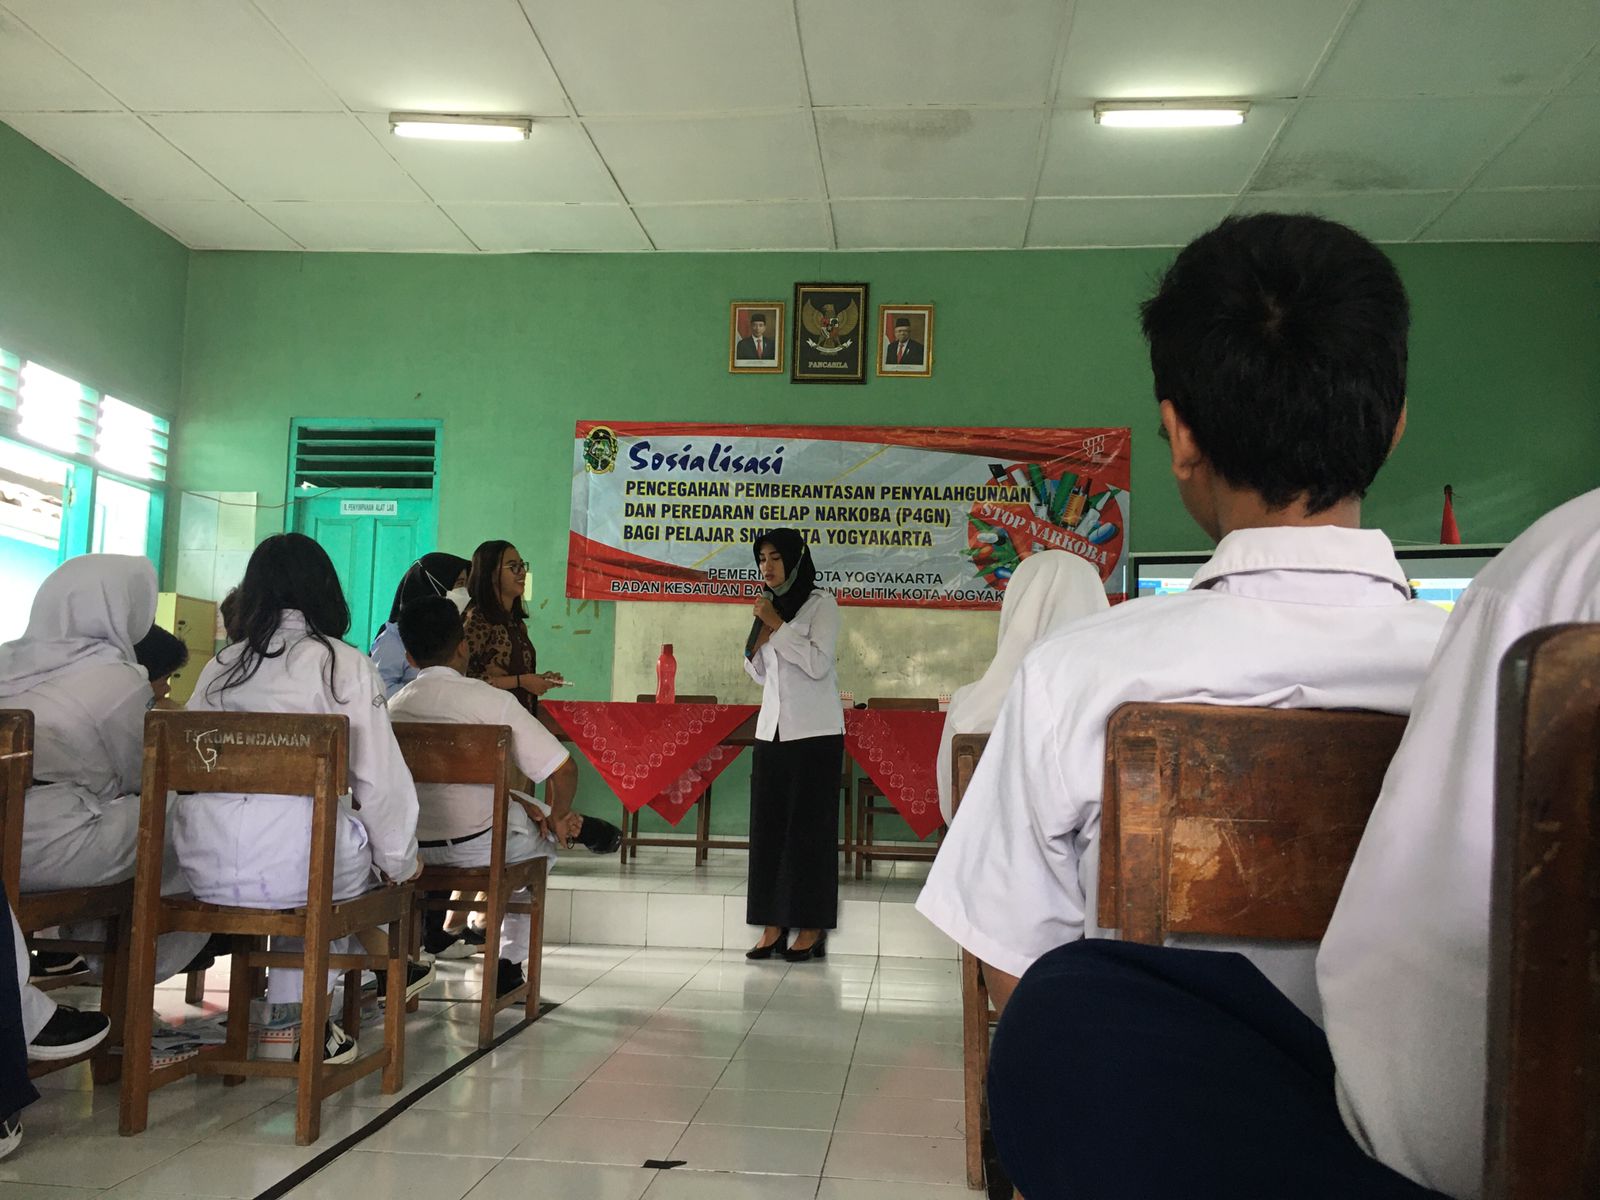 Sosialisasi  ( P4GN )  Pencegahan Pemberatasan Penyalahgunaan dan Peredaran Gelap Narkoba Bagi Pelajar SMP Kota Yogyakarta